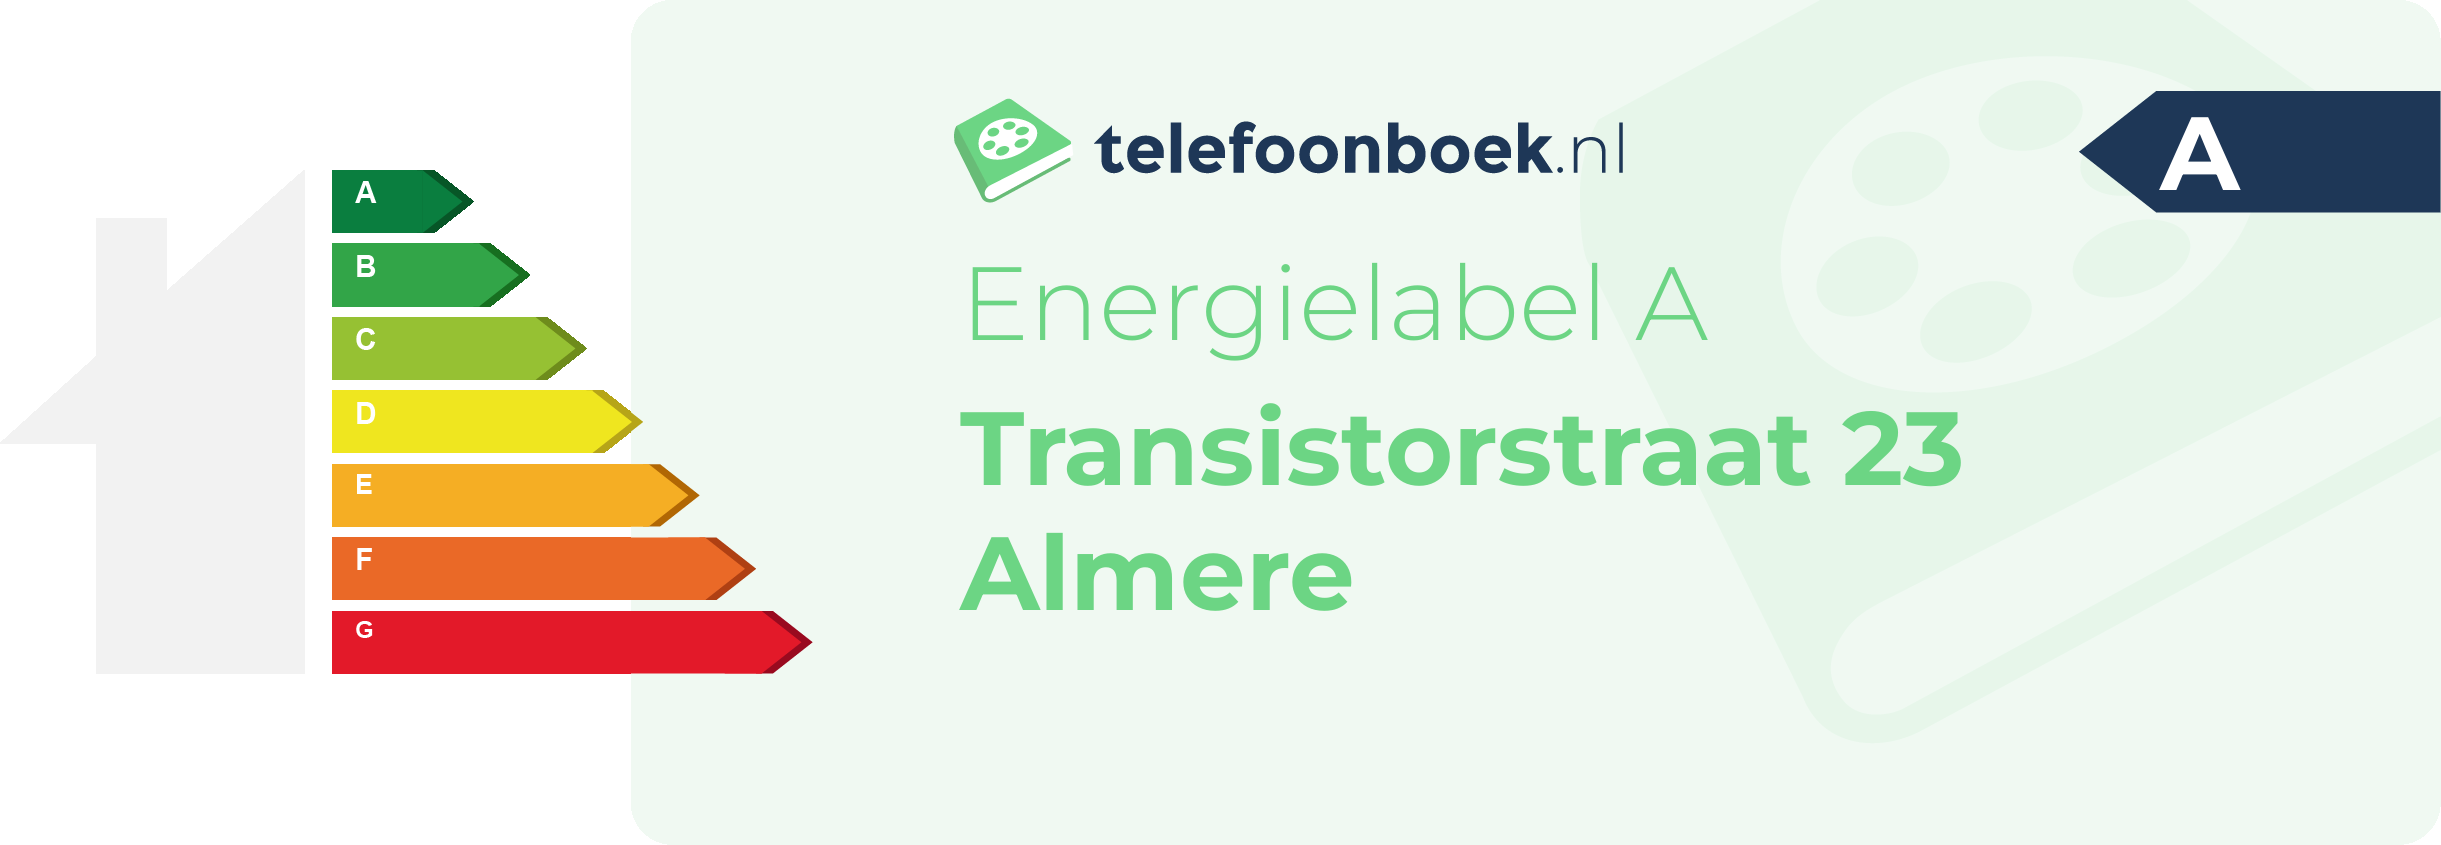 Energielabel Transistorstraat 23 Almere